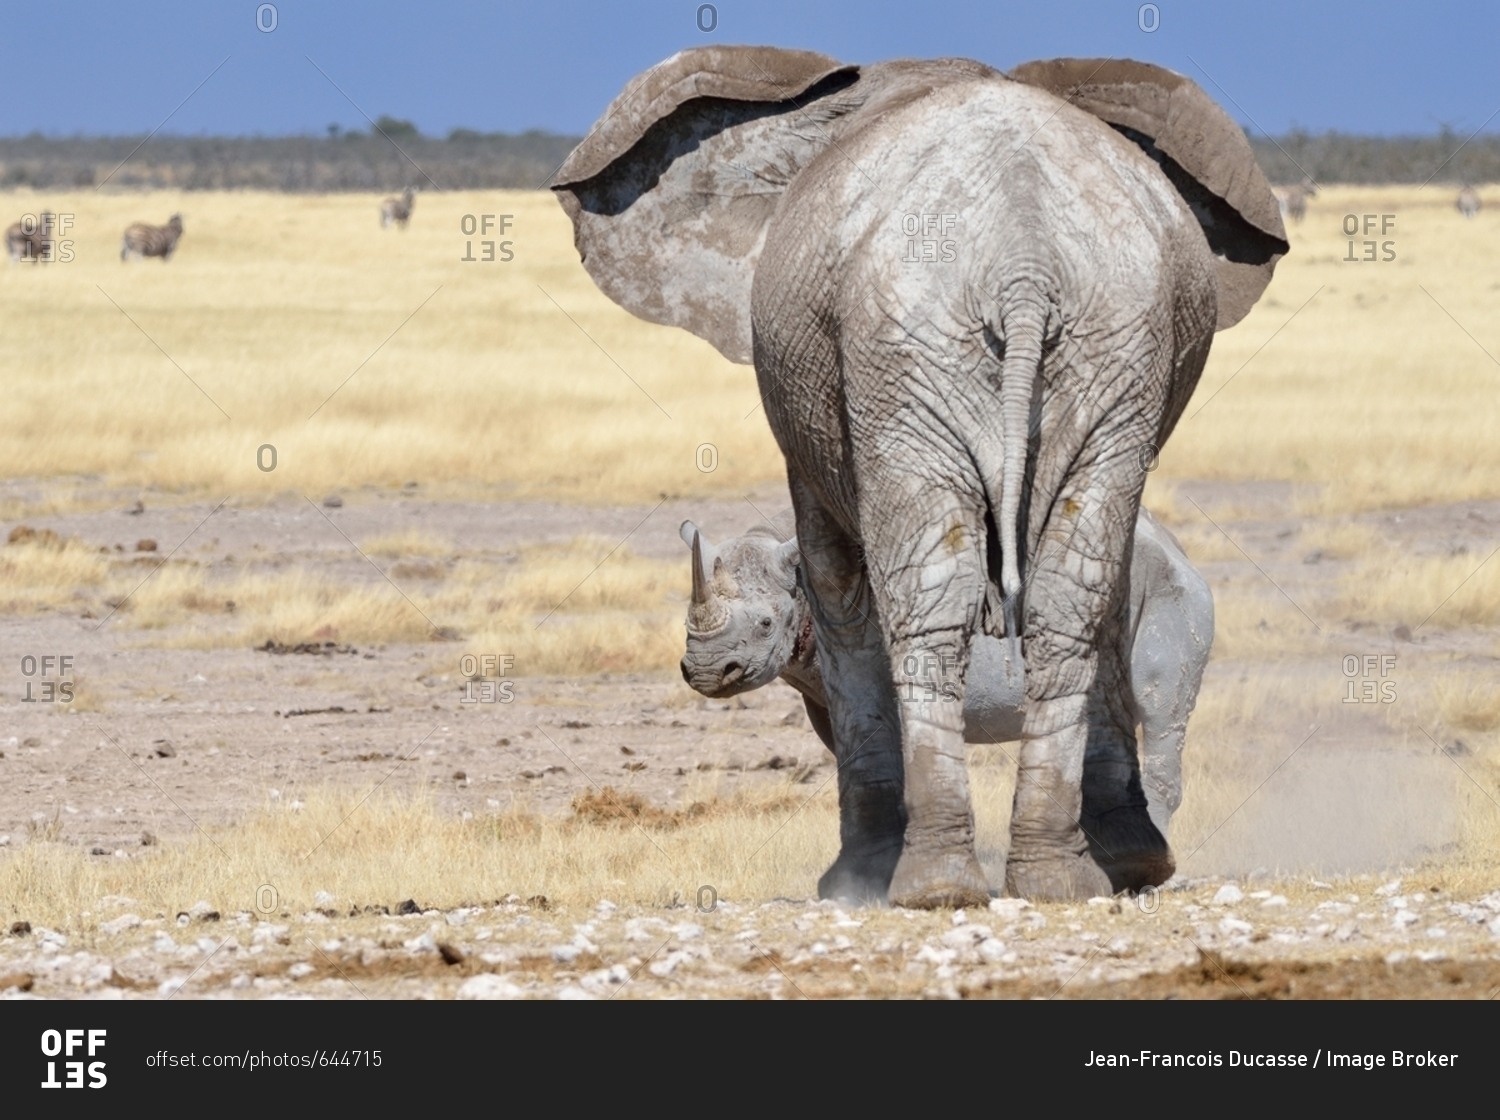 African Elephant (Loxodonta africana), adult female facing a fearful adult male Black Rhinoceros (Diceros bicornis), Etosha National Park, Namibia, Africa